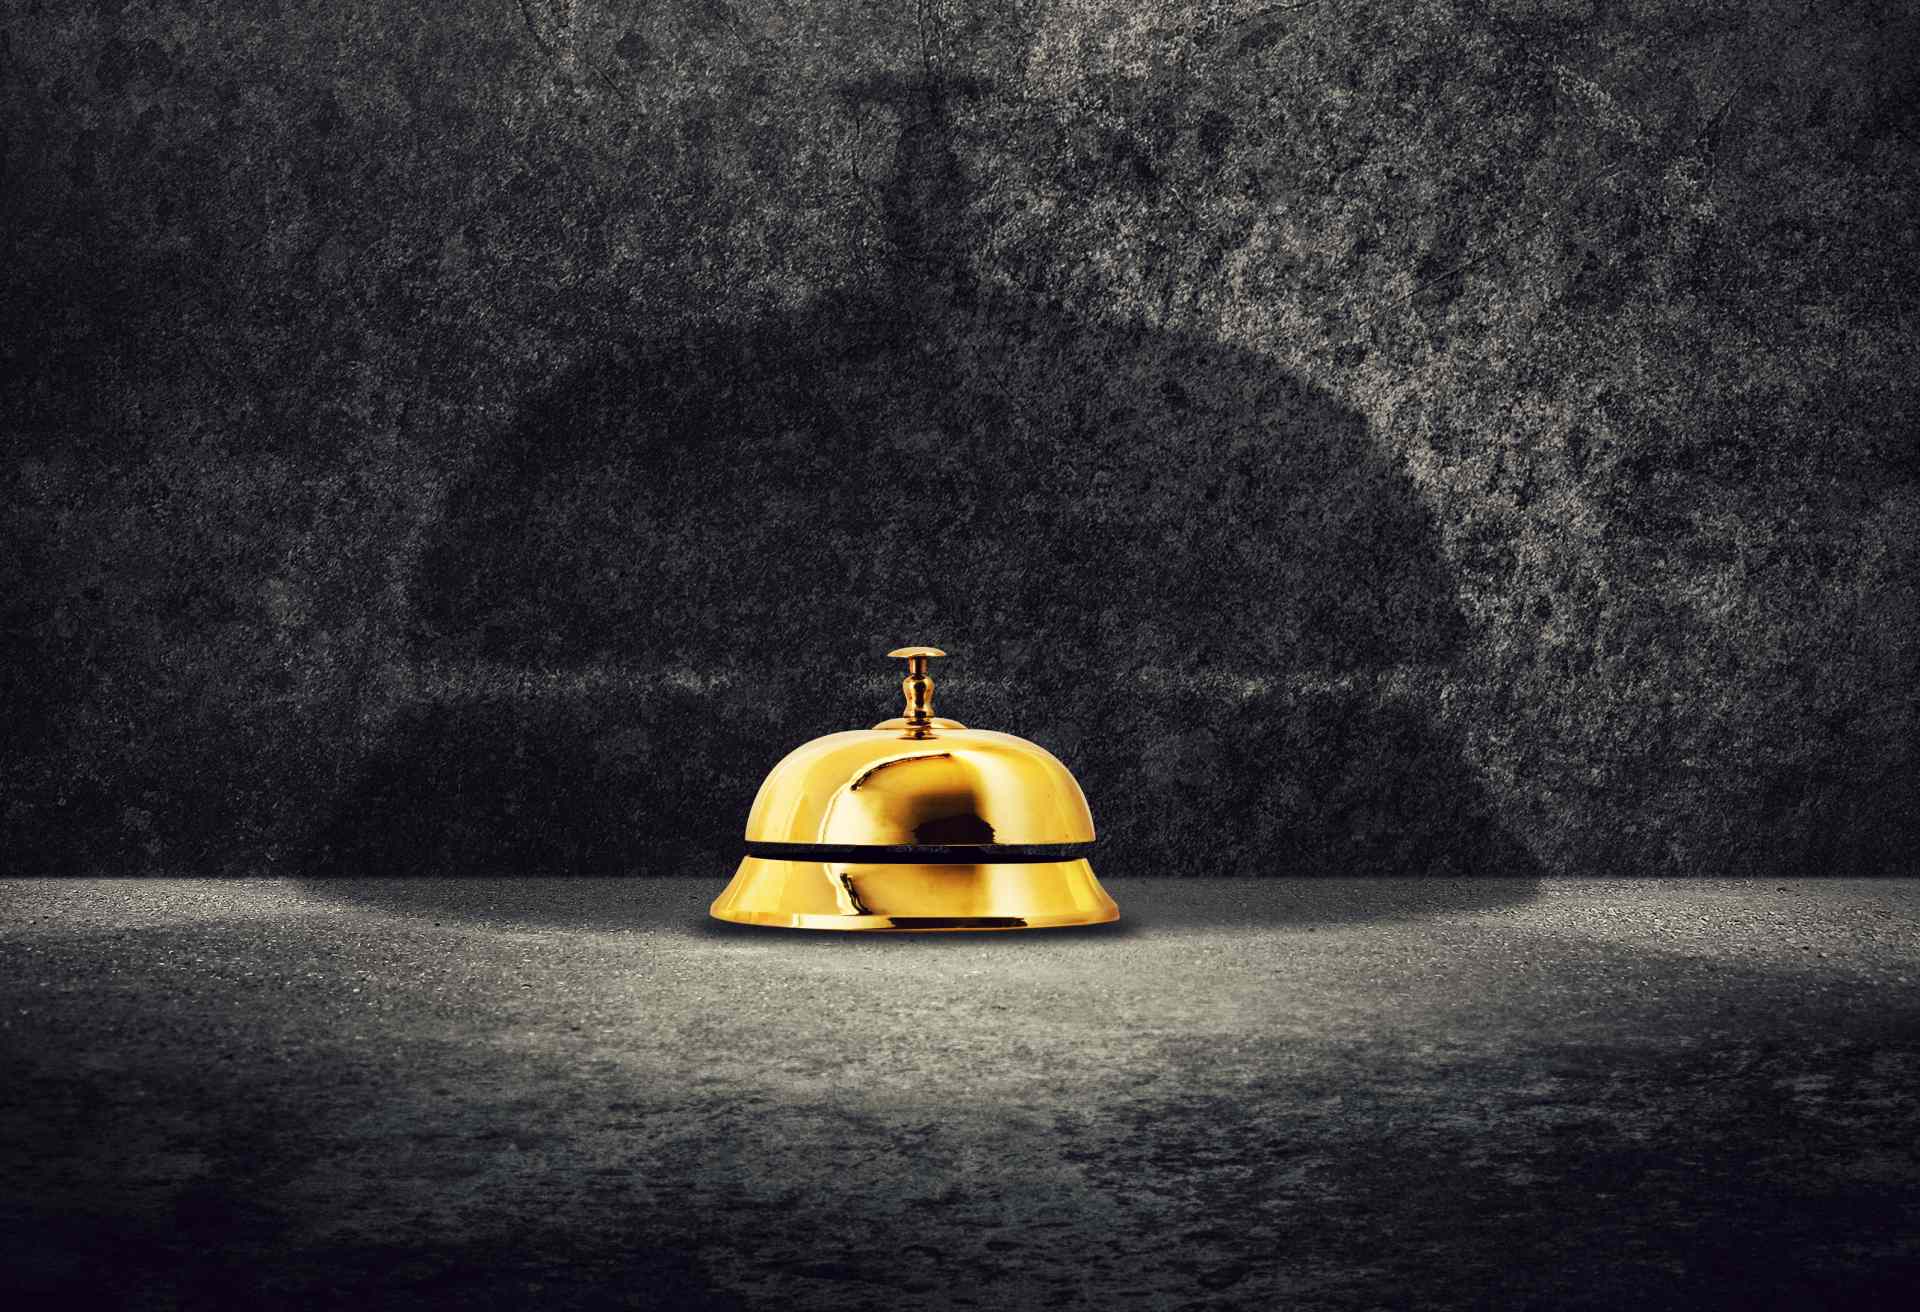 Brass hotel reception bell on ground